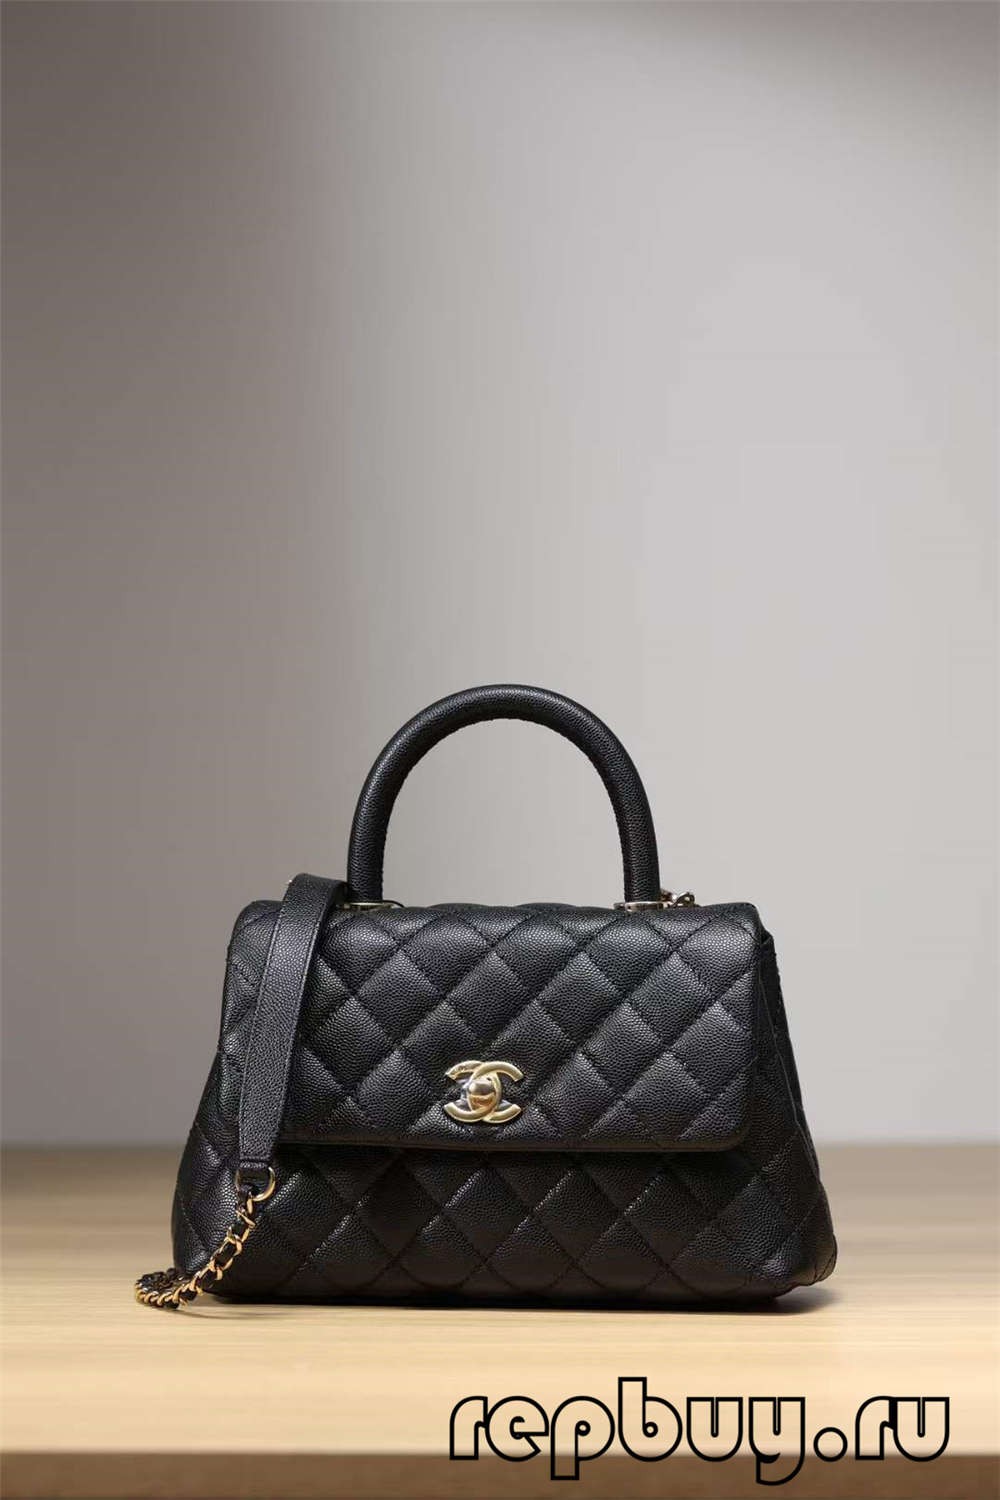 Chanel Coco Handle Top Replica Handbag Black Zinare Tare Duba (2022 An sabunta) -Mafi kyawun ingancin Jakar Louis Vuitton Bag Online Store, Replica designer bag ru